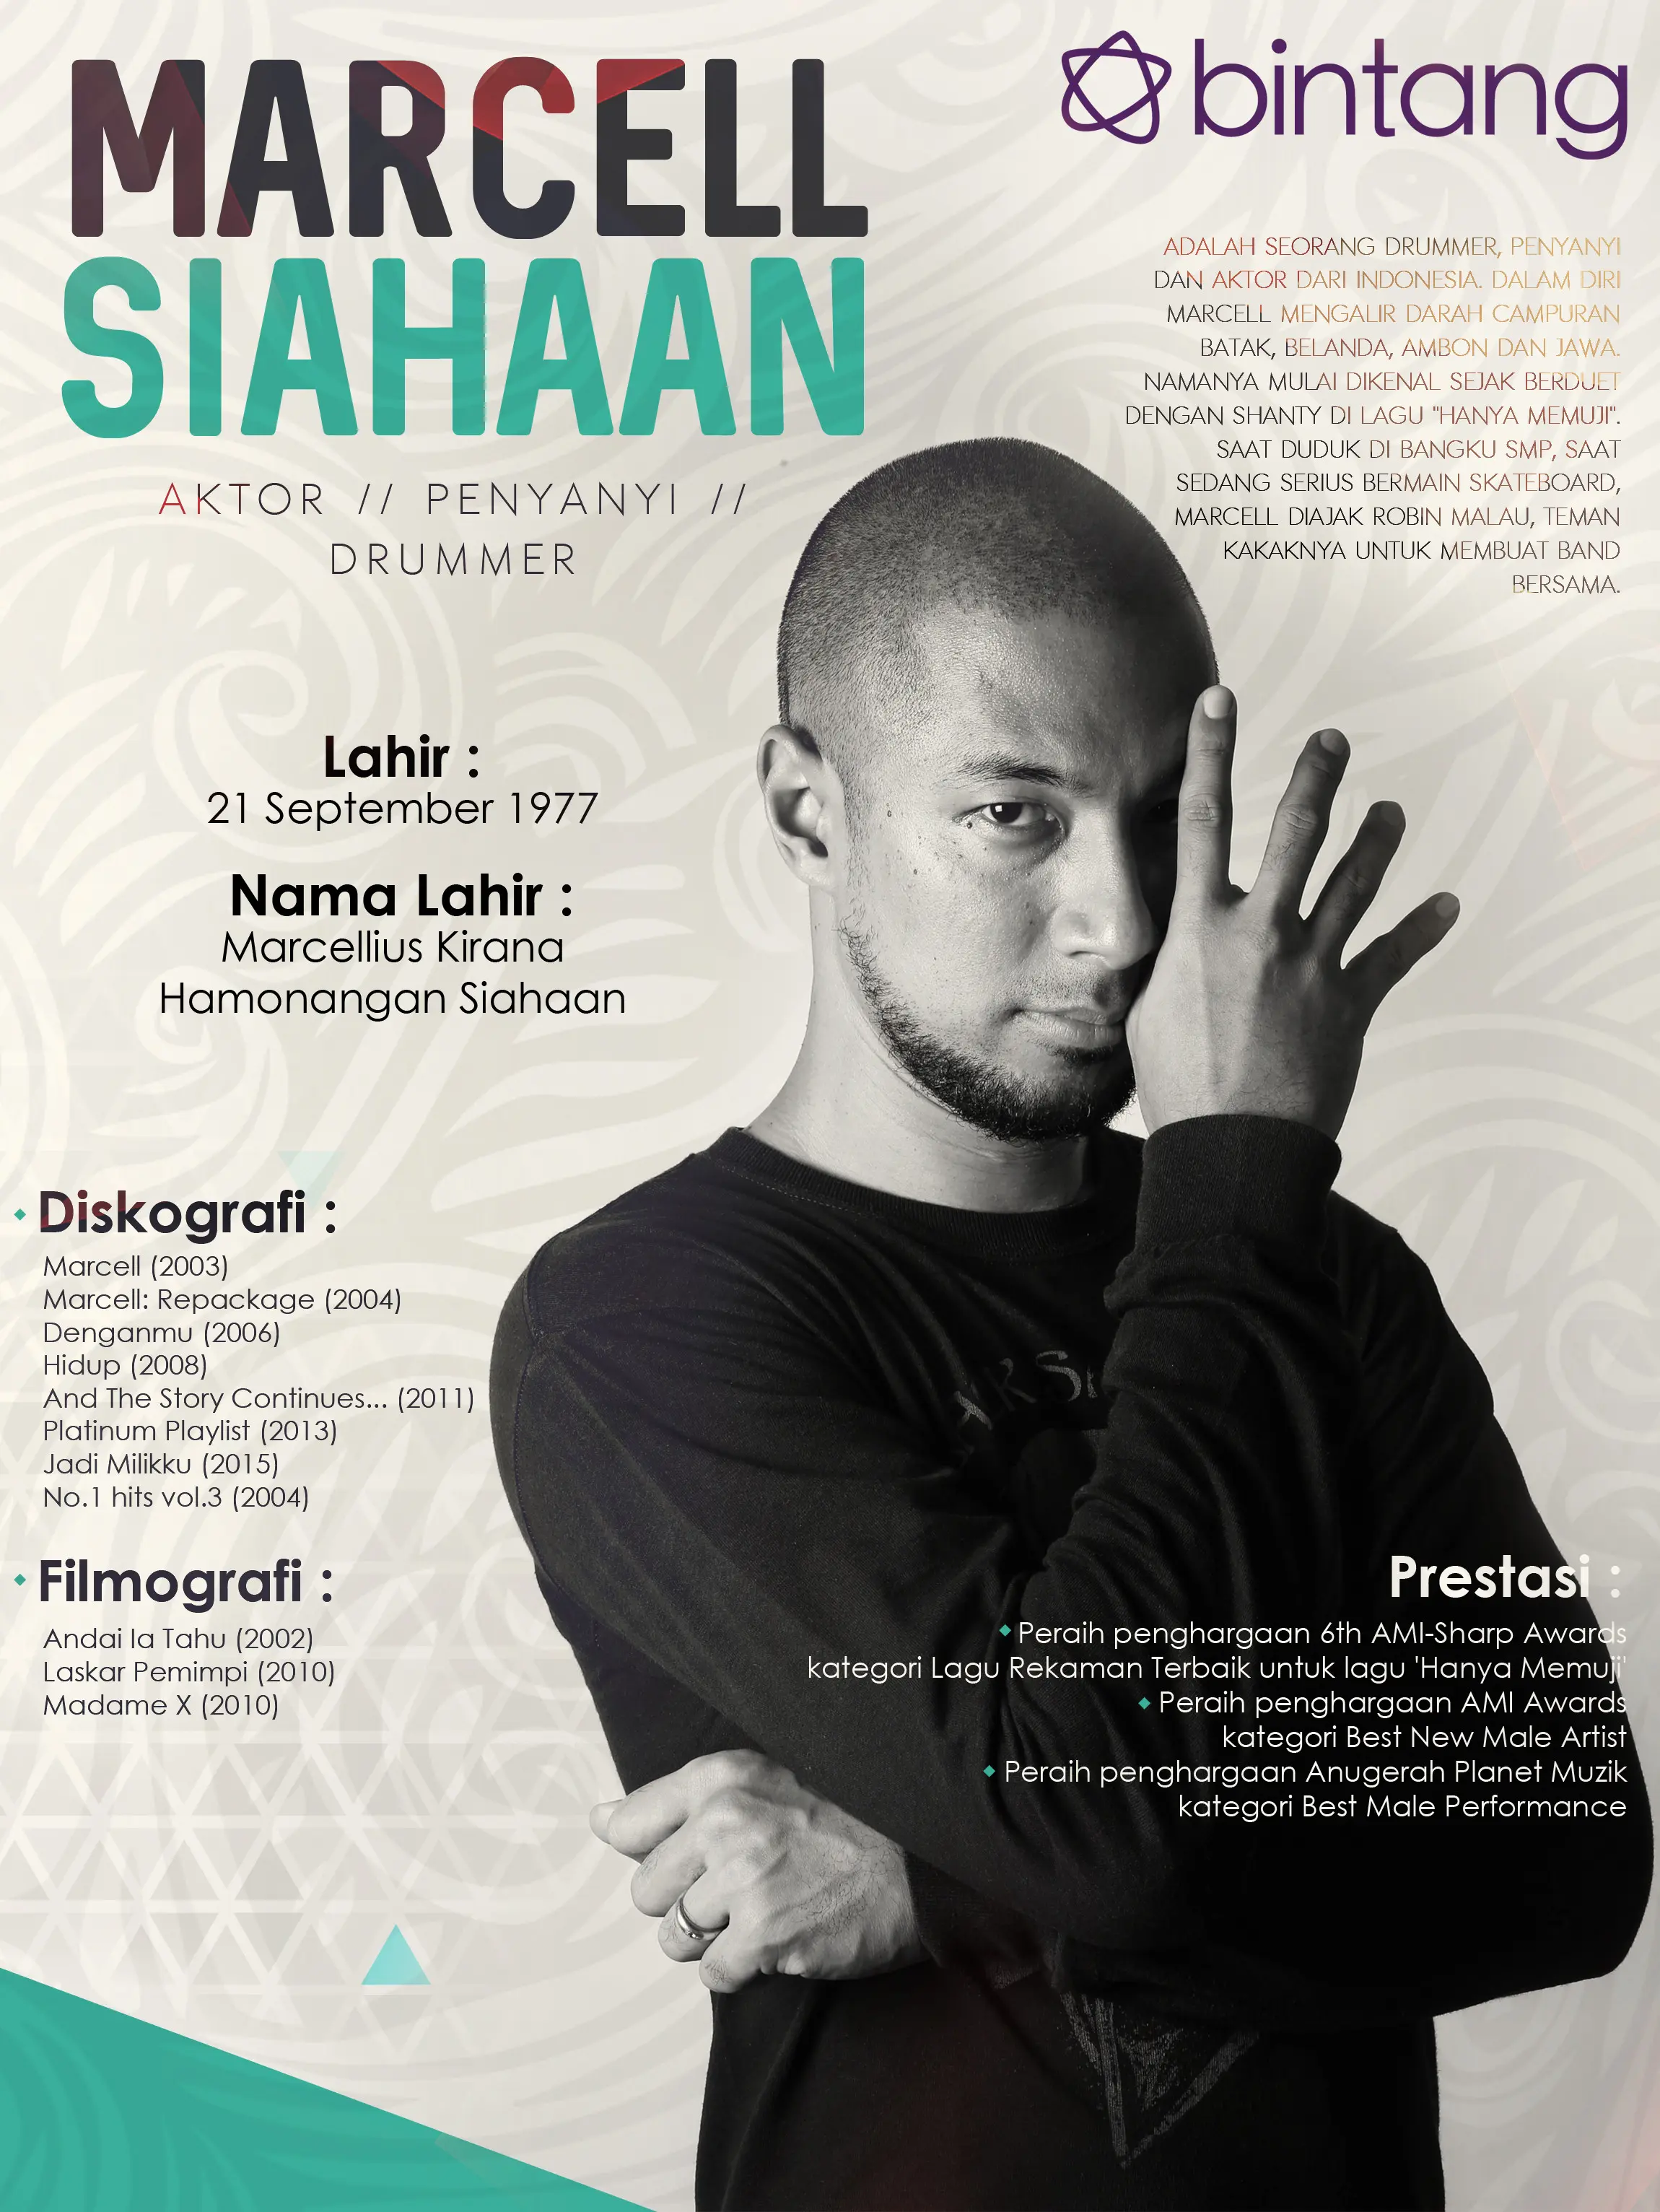 Celeb Bio Marcell Siahaan (Photographer: Bambang E. Ros/Bintang.com, Desain: Nurman Abdul Hakim/Bintang.com)